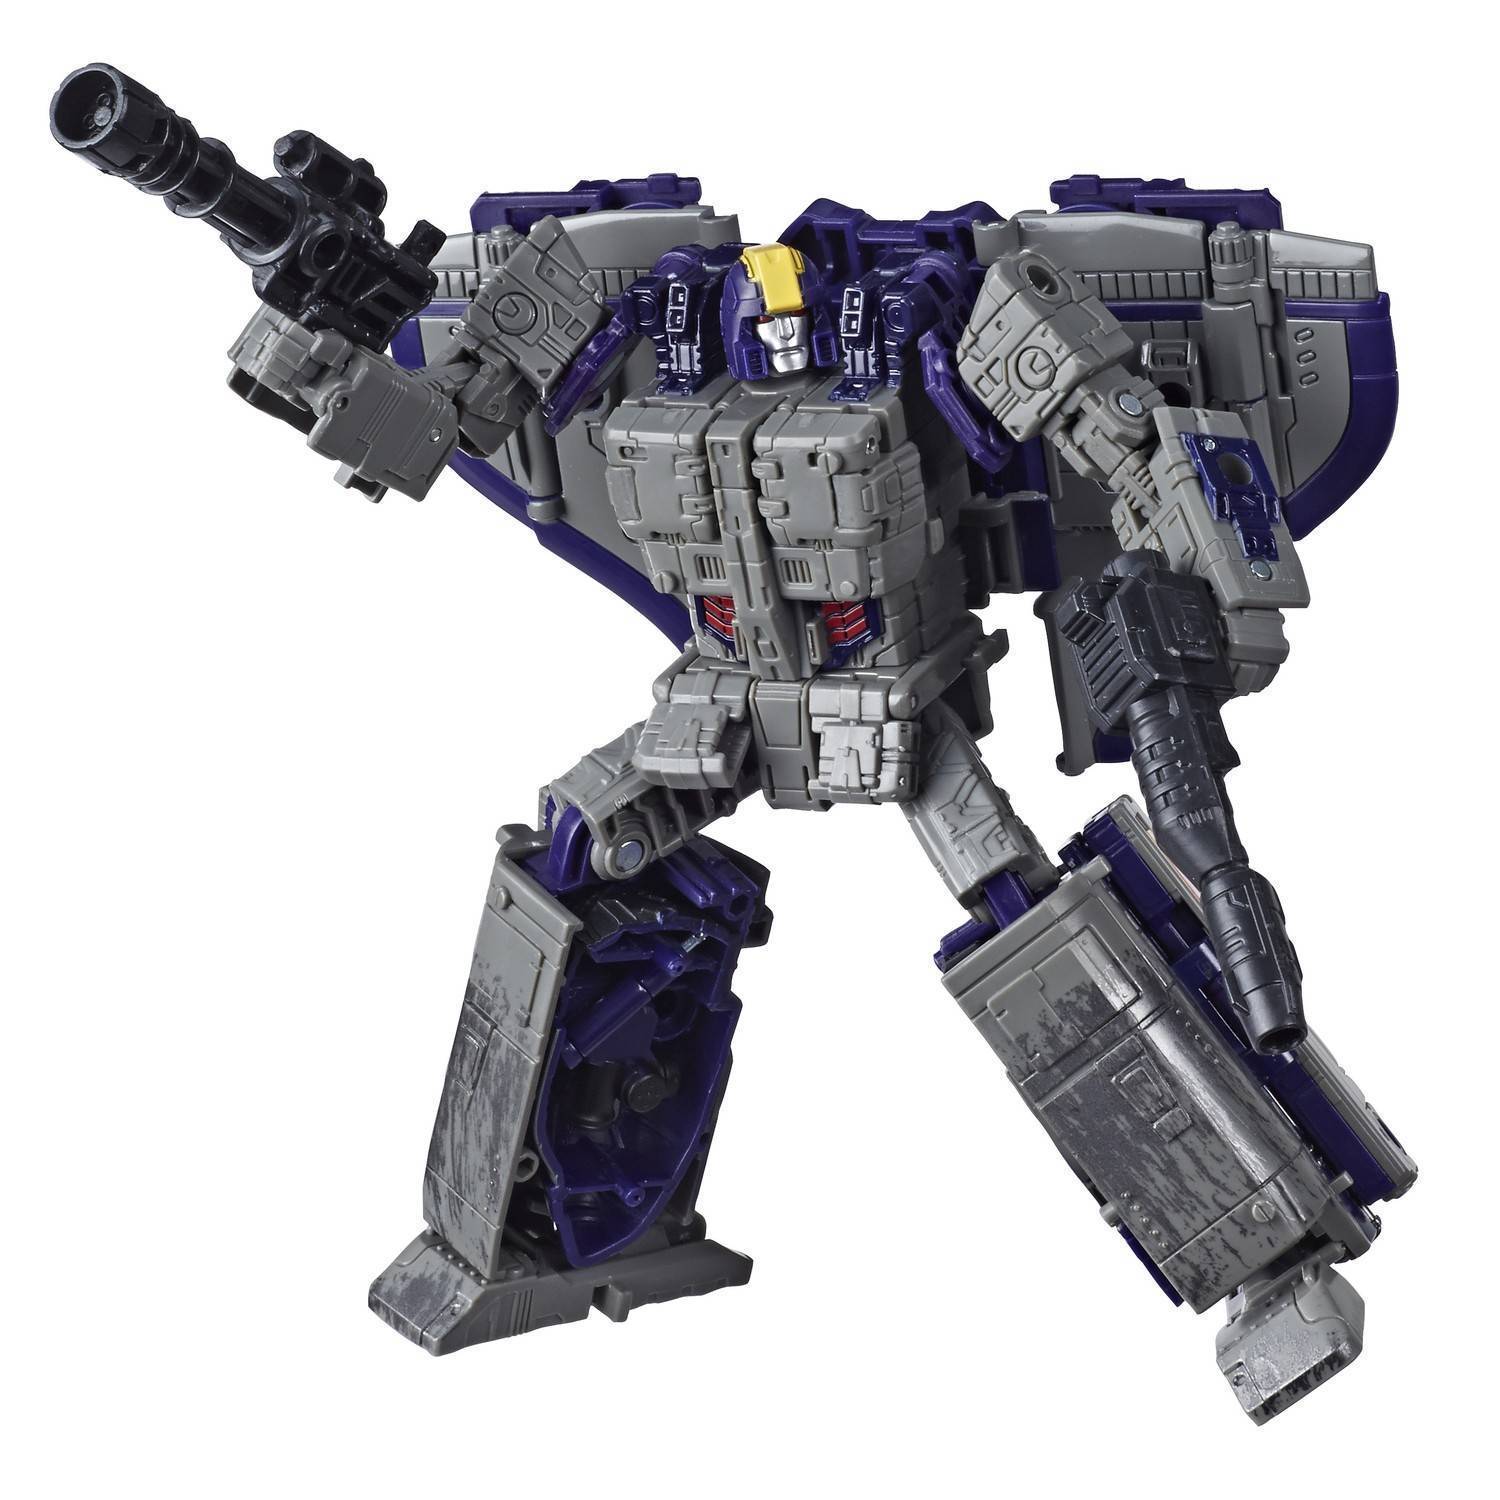 Transformers игрушки. Astrotrain Transformers Toy. Astrotrain трансформер игрушка. Transformers WFC leader class.